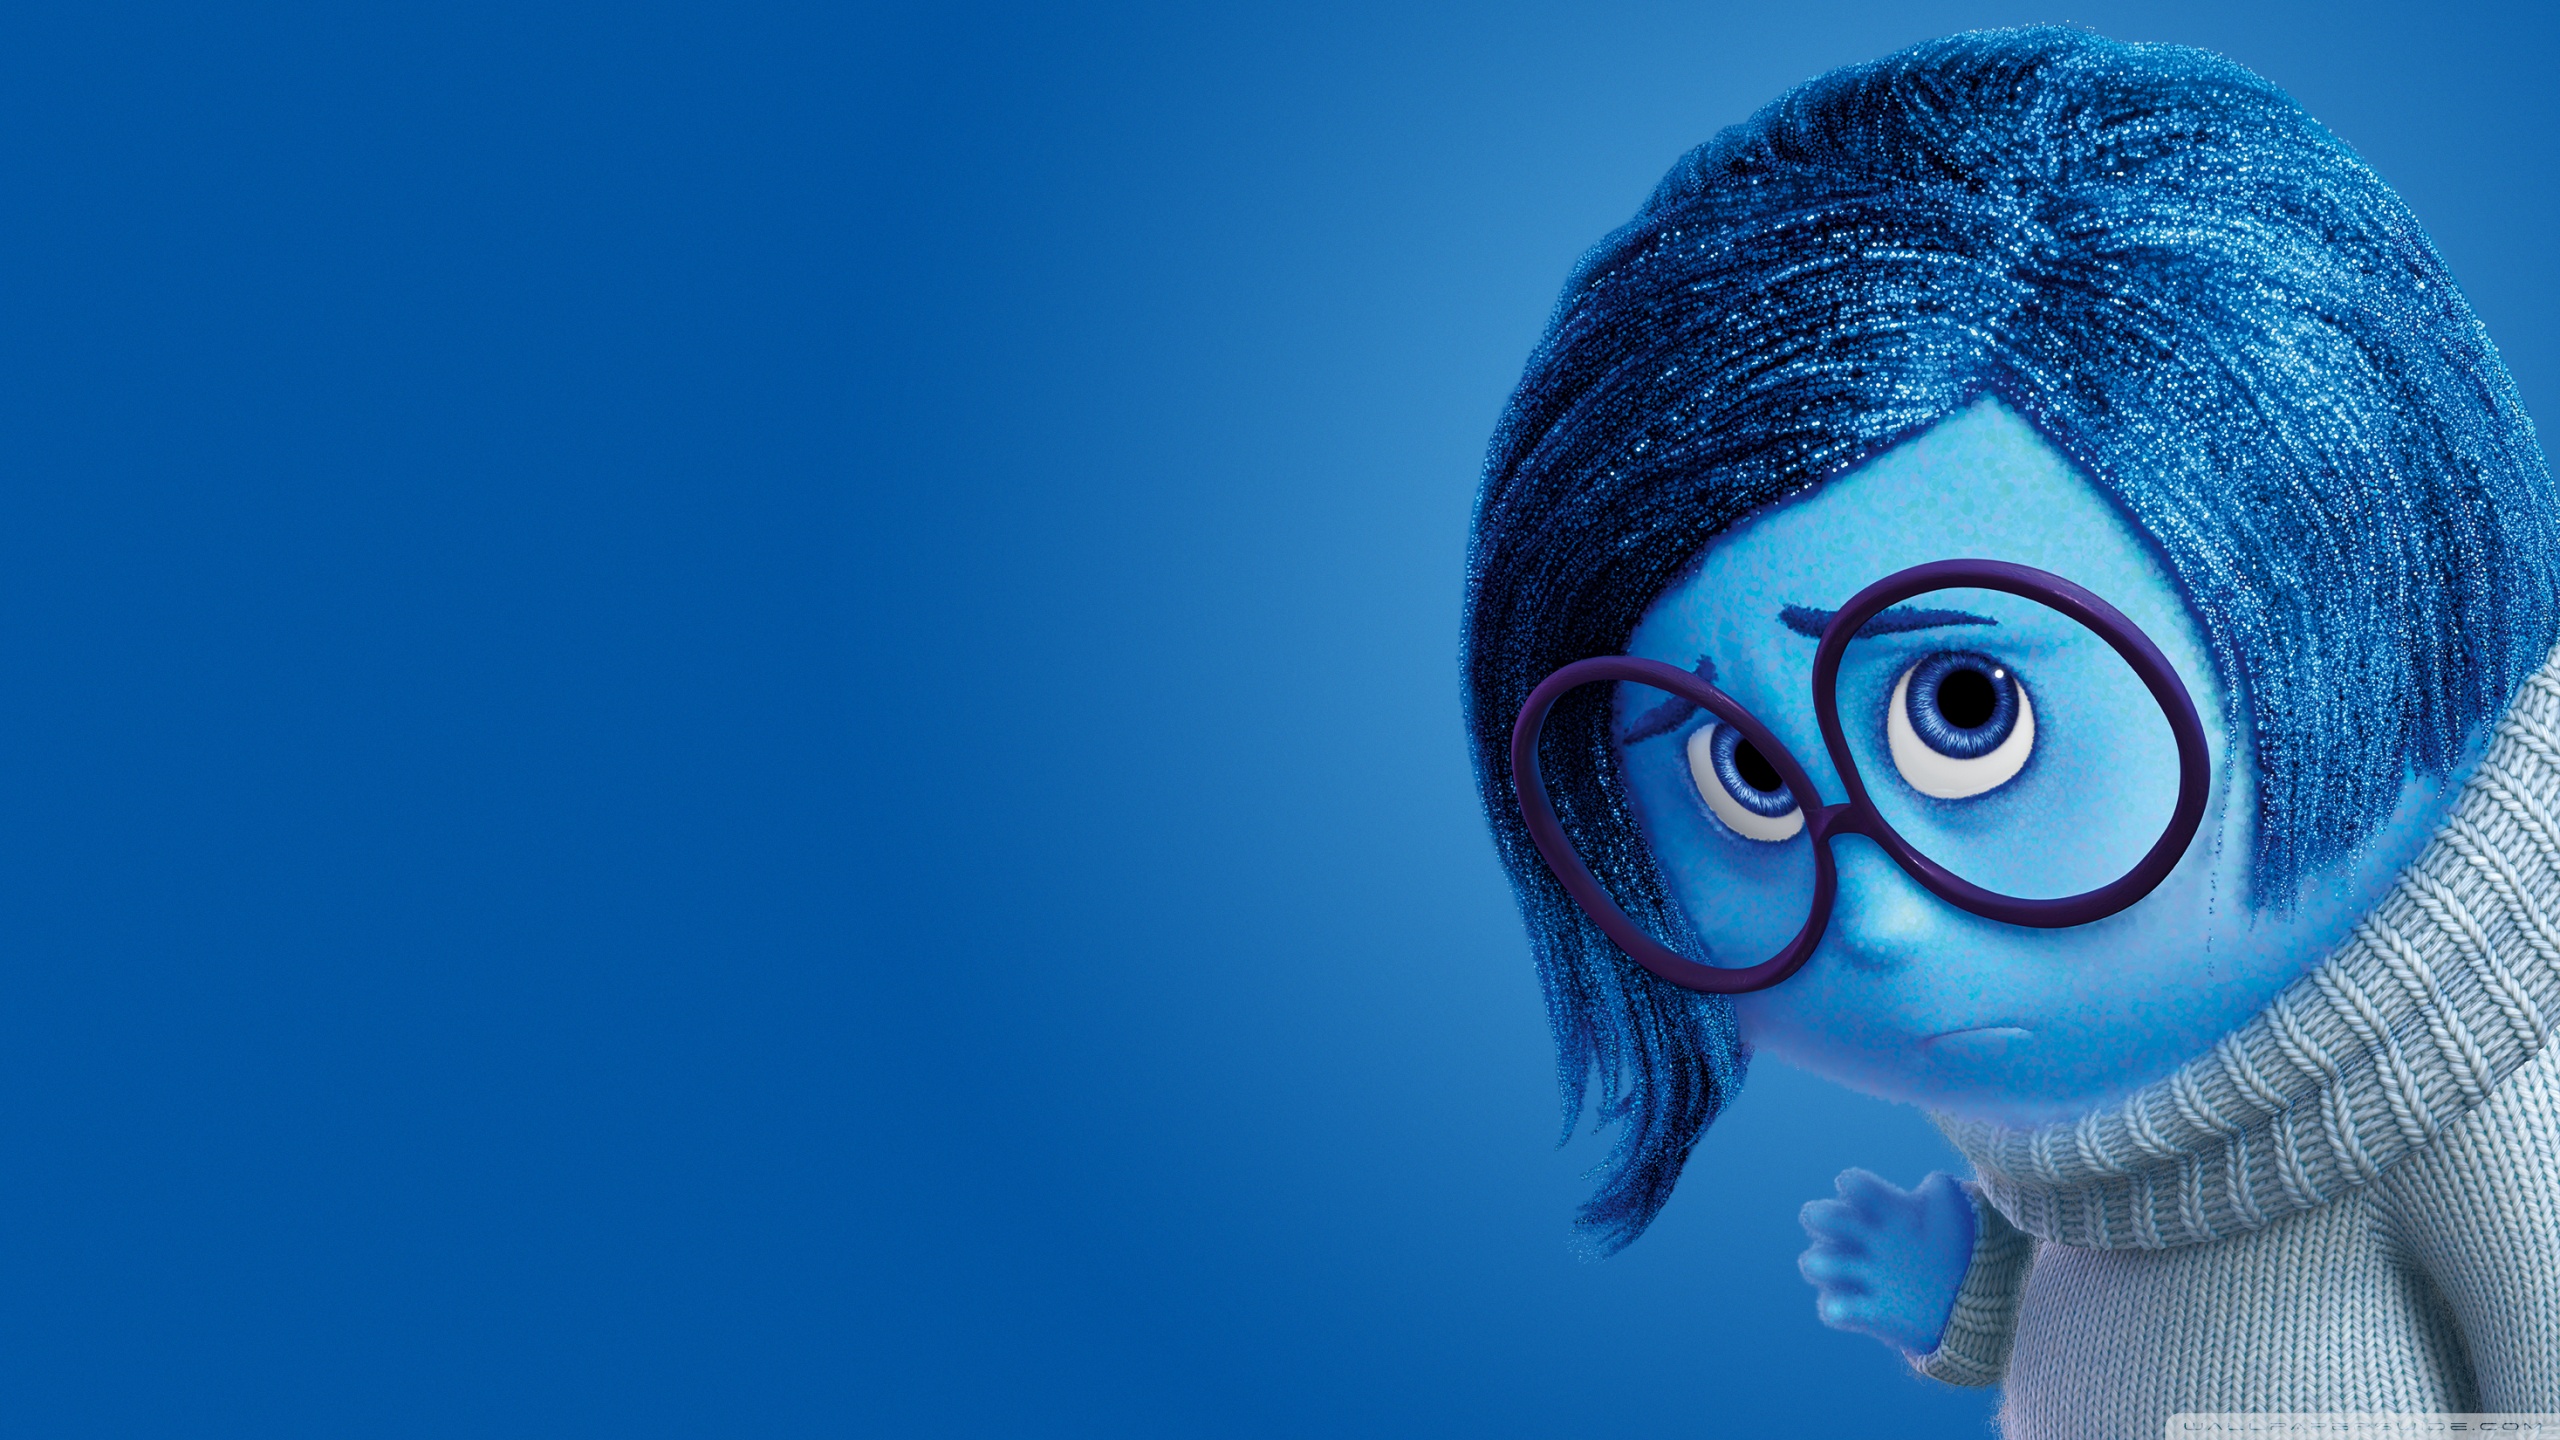 Inside Out Sadness - Disney, Pixar Ultra HD Desktop Background Wallpaper  for : Widescreen & UltraWide Desktop & Laptop : Multi Display, Dual Monitor  : Tablet : Smartphone